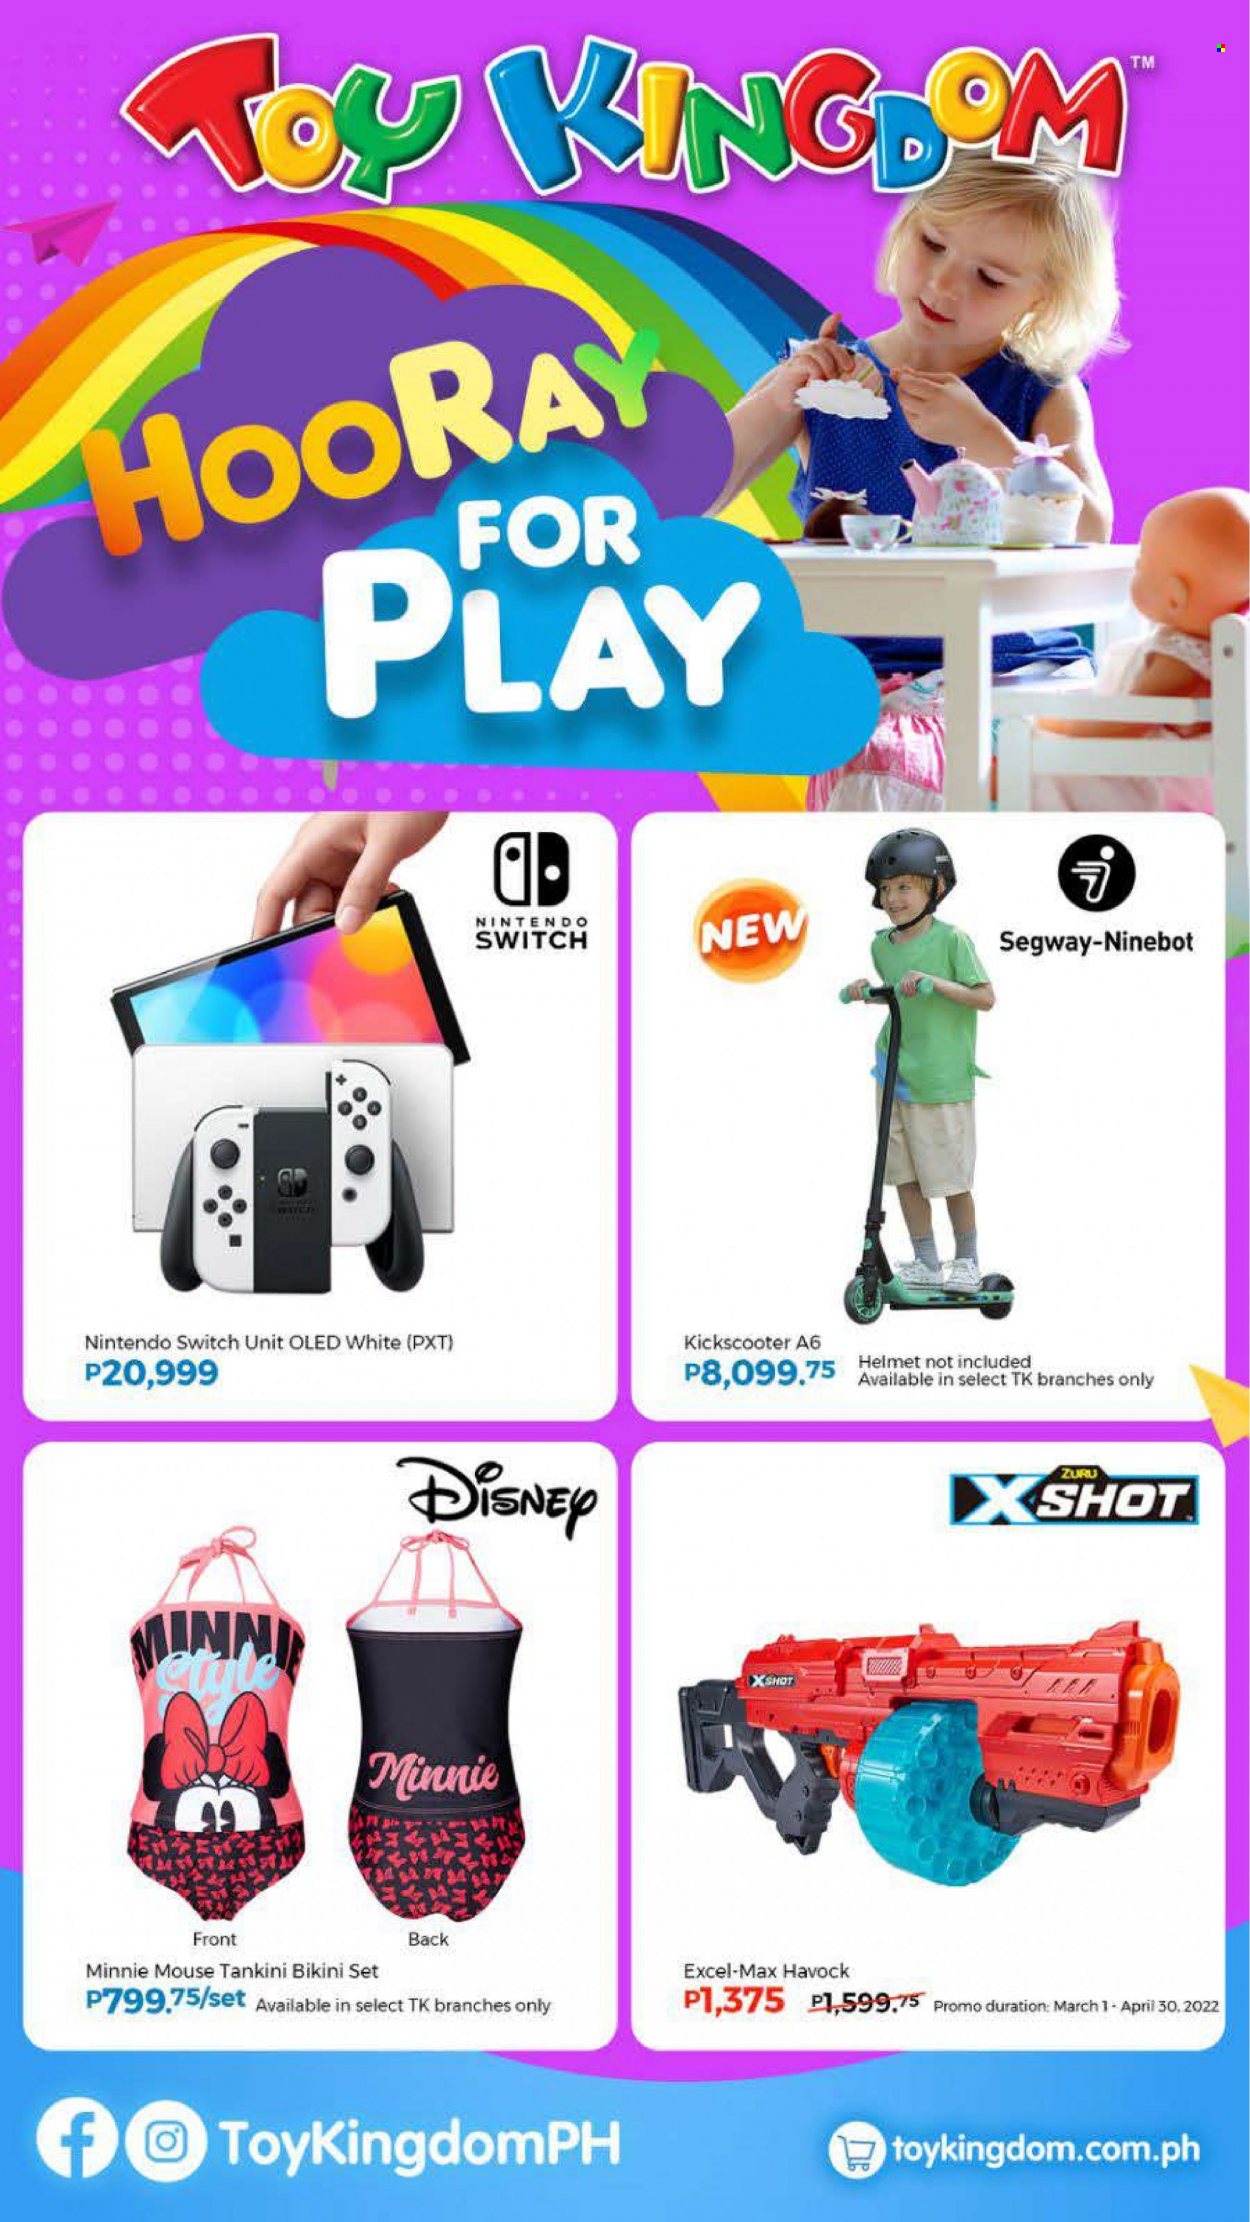 thumbnail - Toy Kingdom offer  - Sales products - Nintendo Switch, Disney, Minnie Mouse, helmet, Zuru. Page 1.